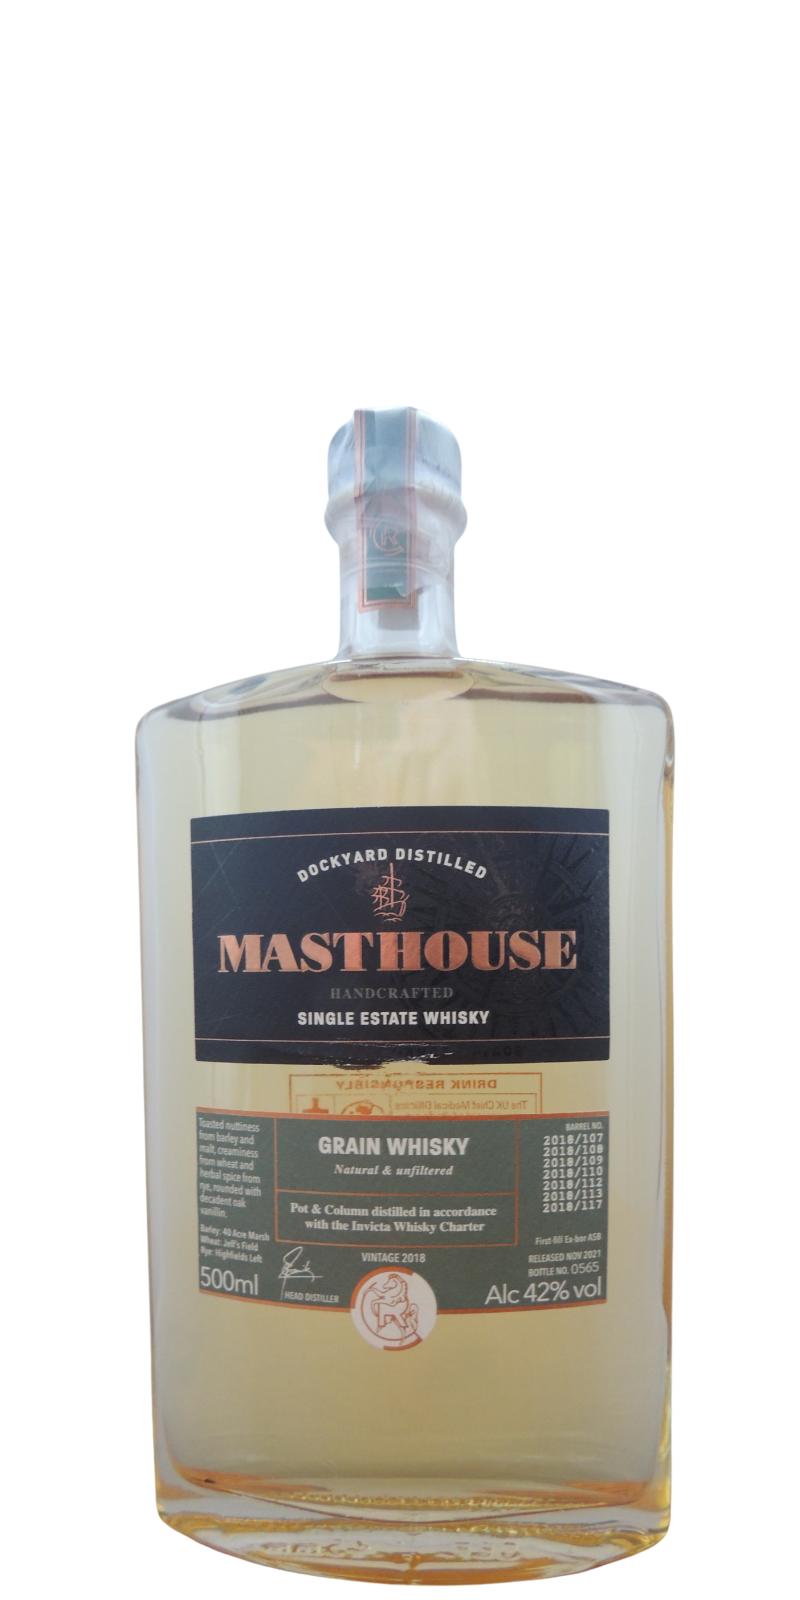 Masthouse Grain Whisky First-fill ex-bar ASB 42% 500ml